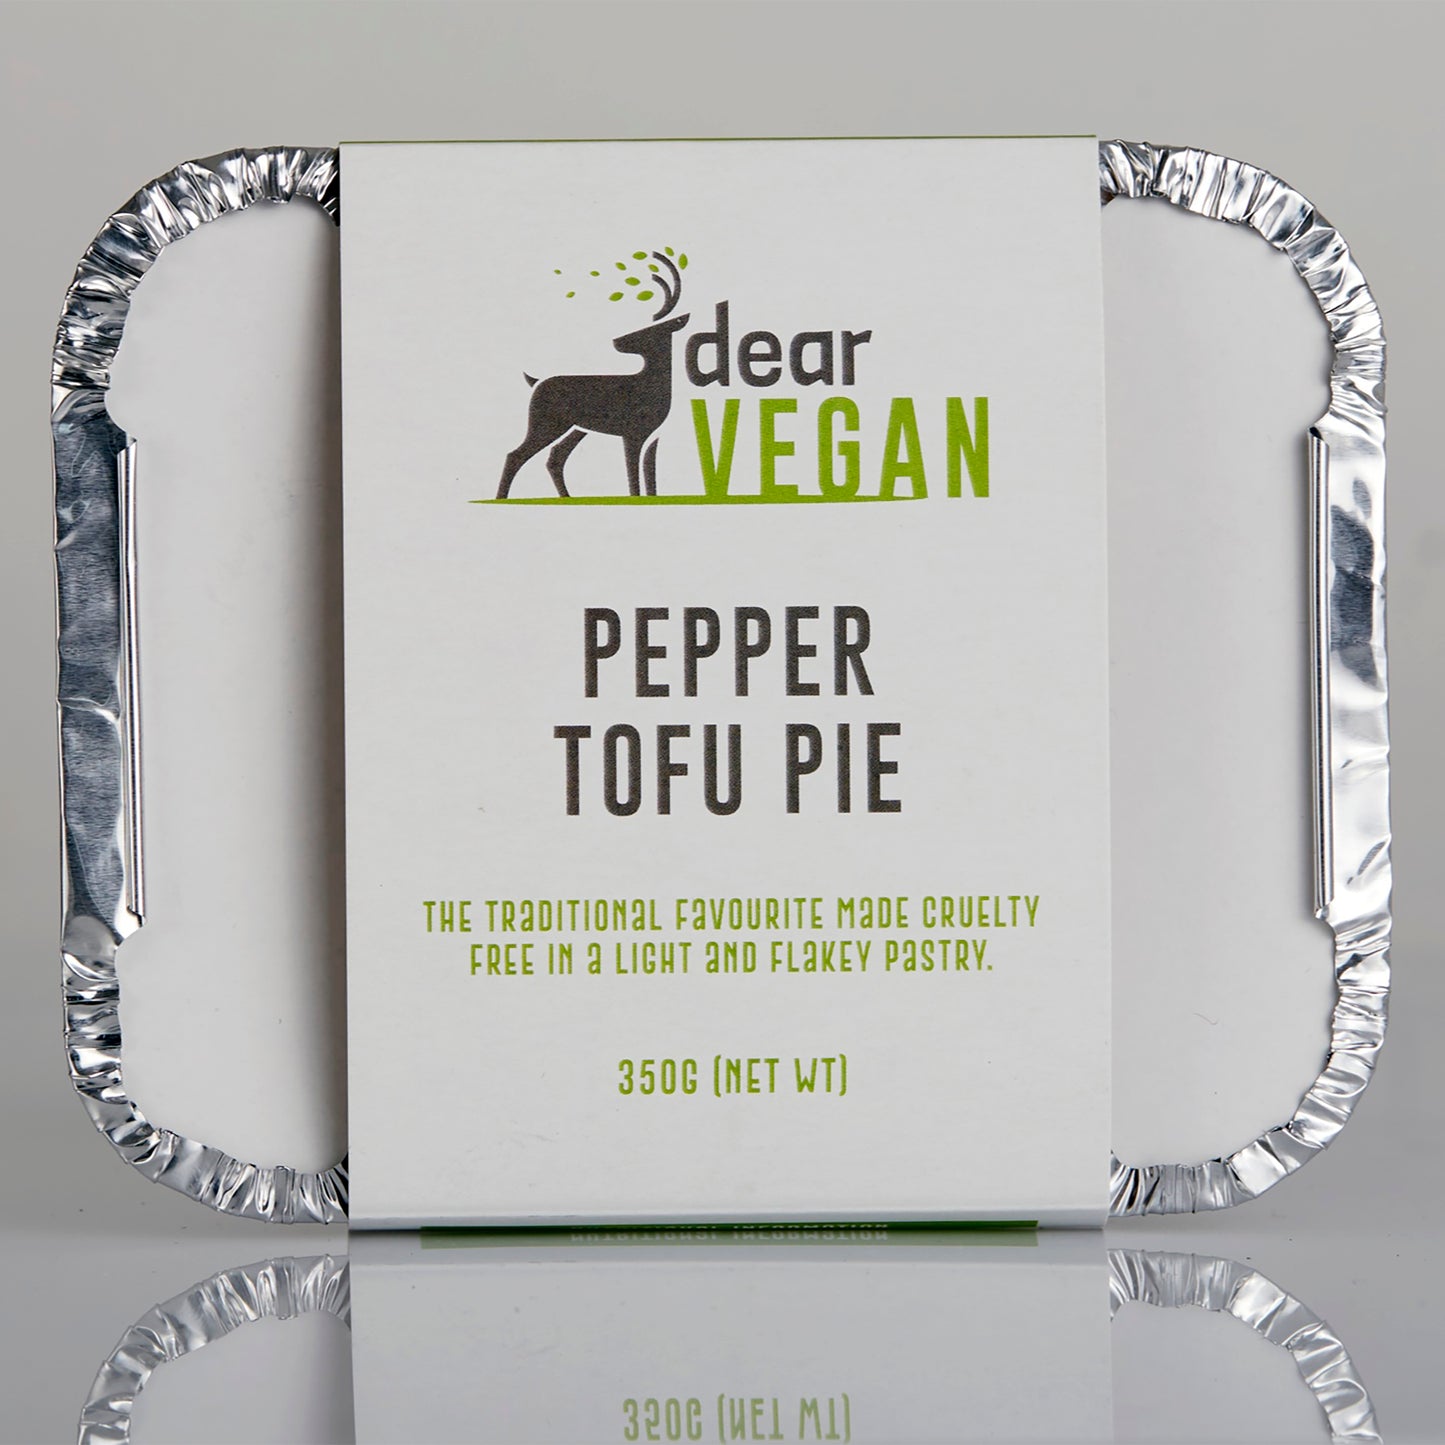 Dear Vegan - Pepper Tofu Pies 350g